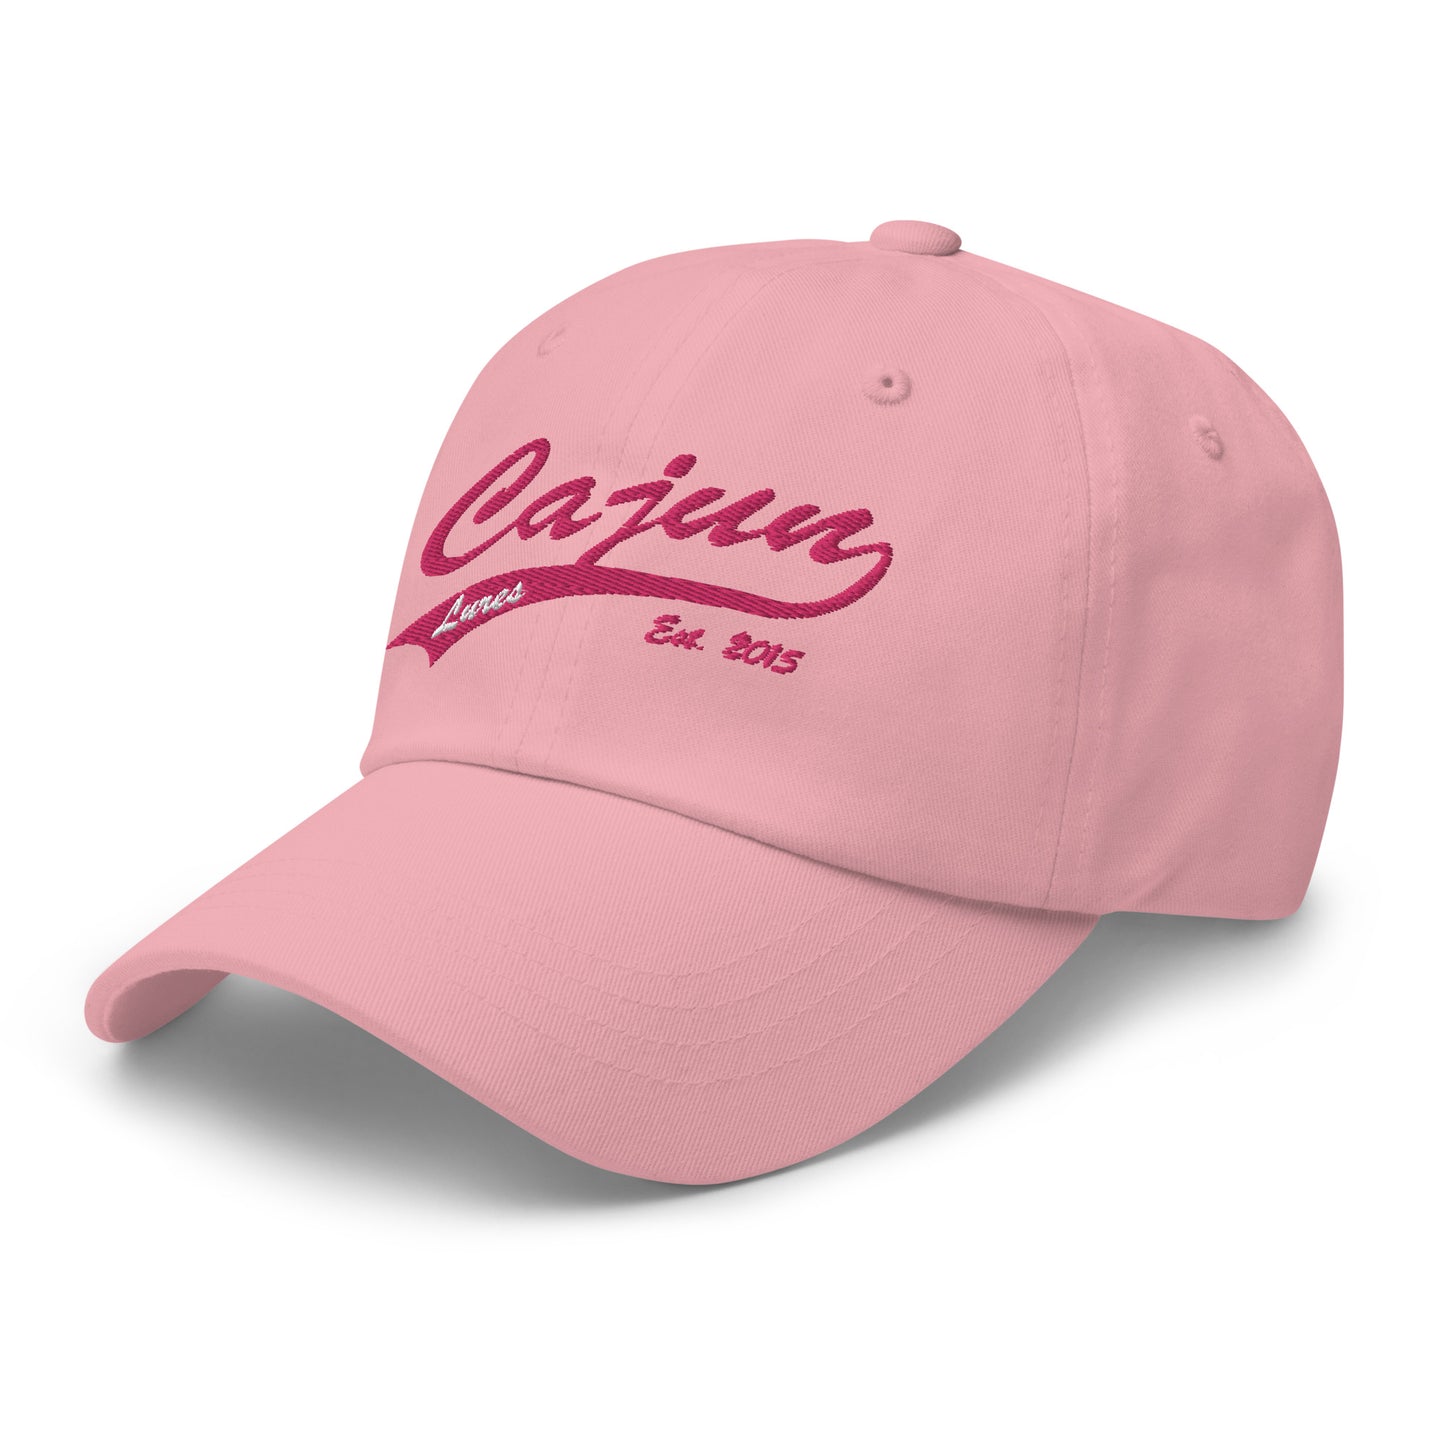 Pink Classic Hat - Cajun Lures